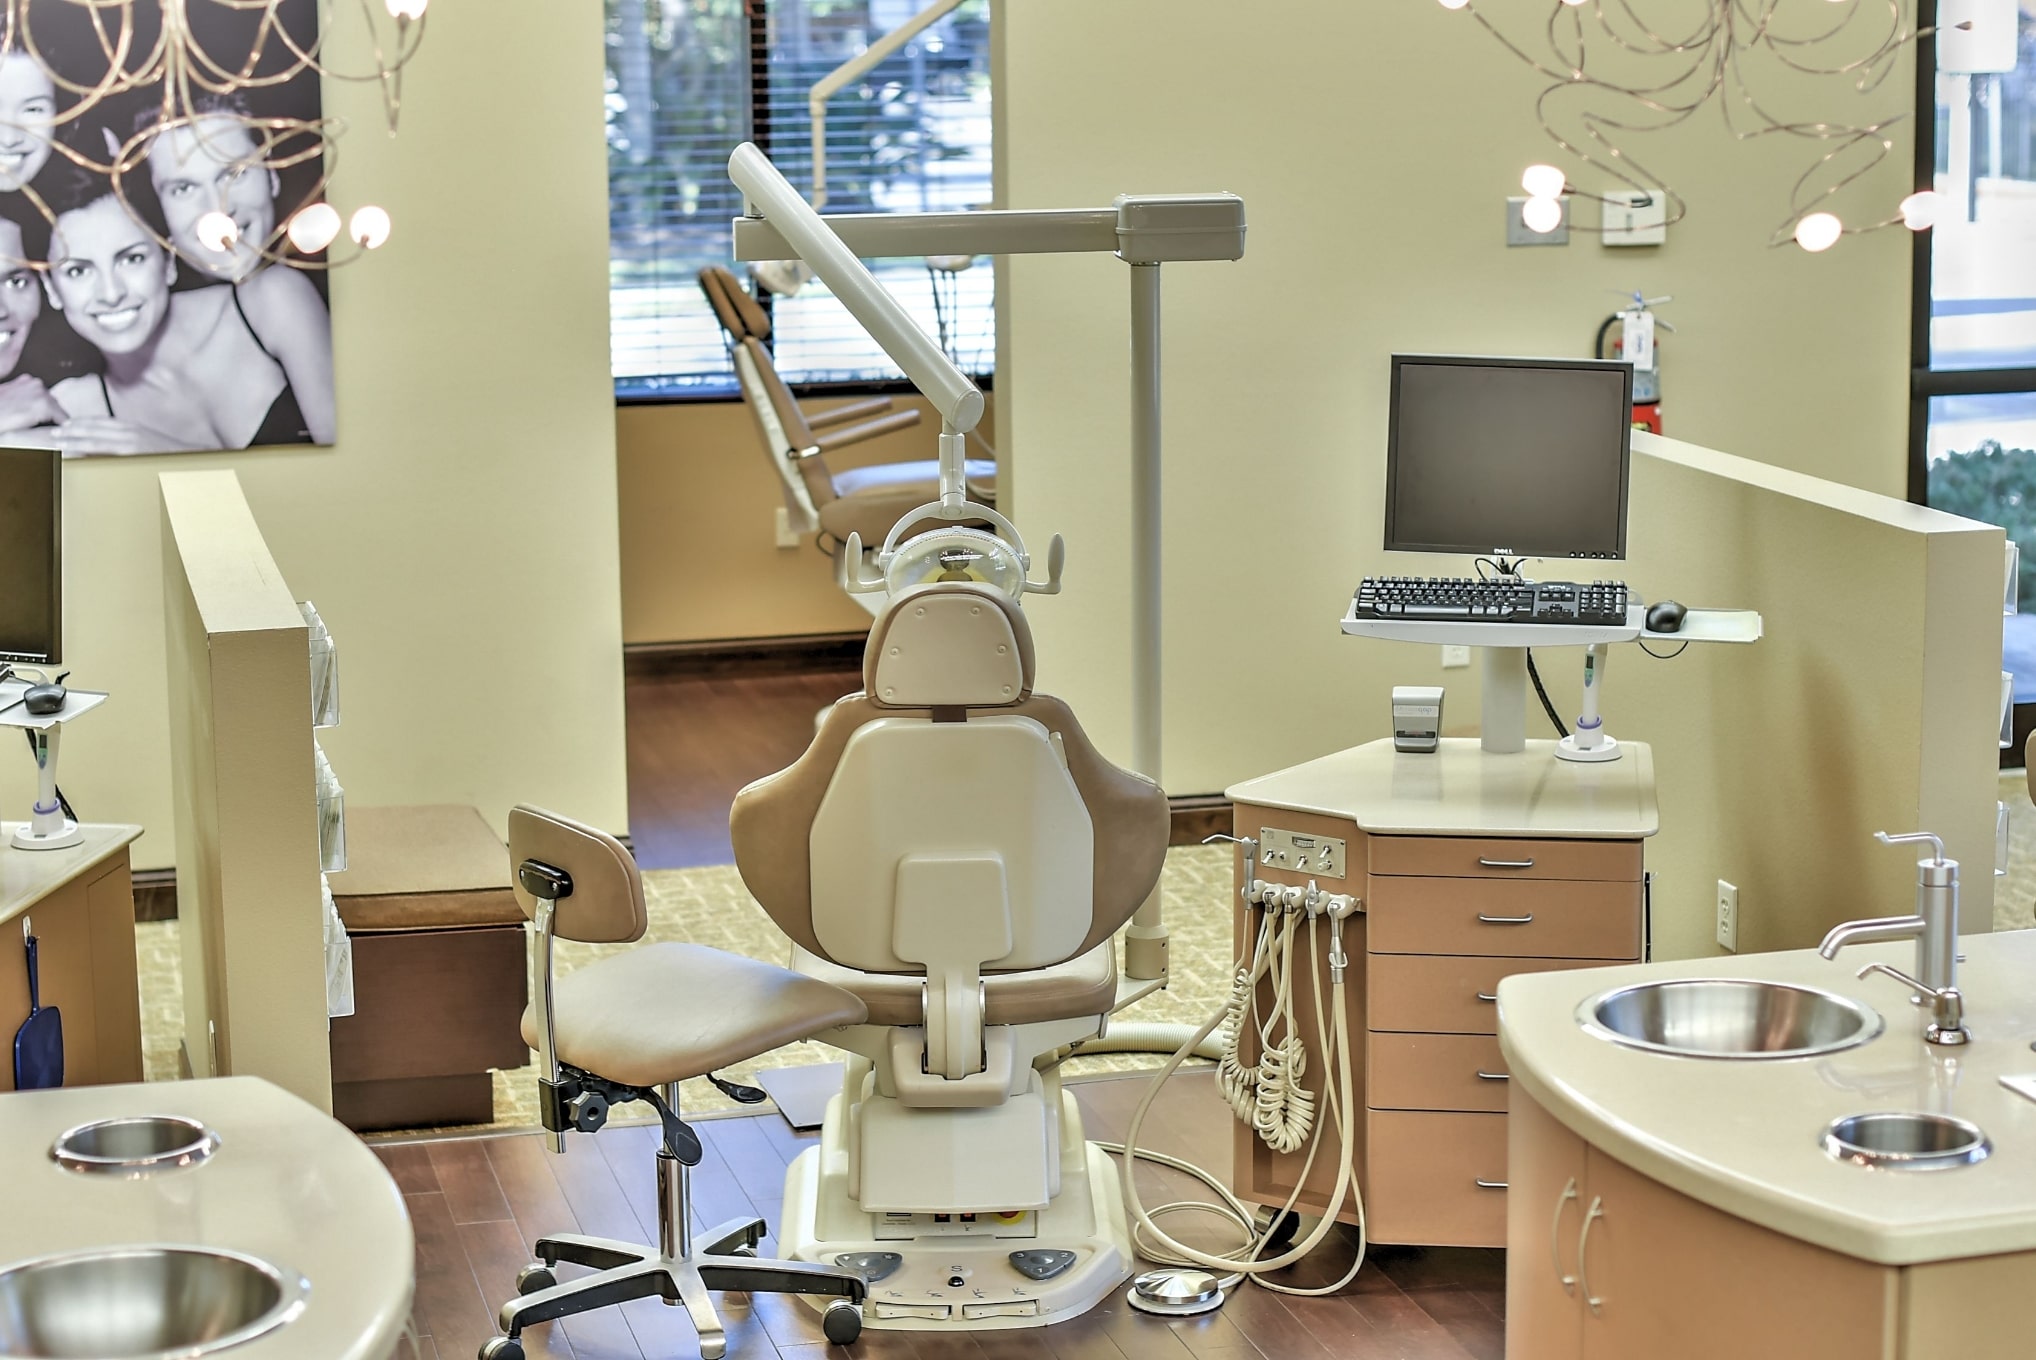 orthodontic treatment chair